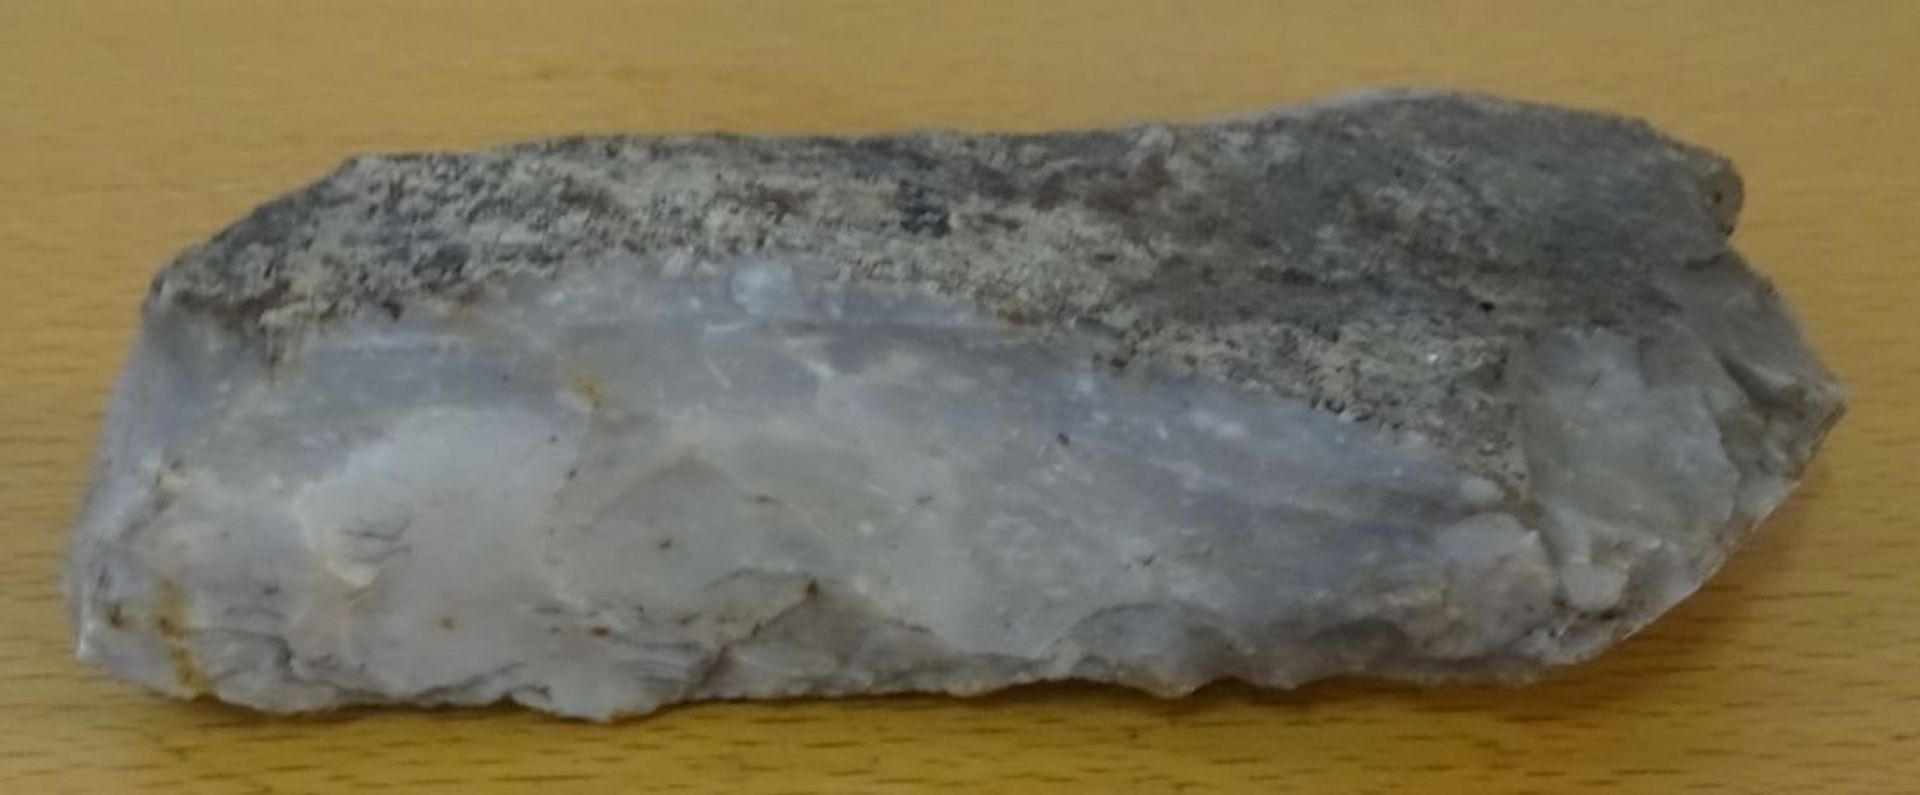 Faustkeil, Mineral-Quartz?, Fundort Dänemark, 15x6 cm - Bild 2 aus 4